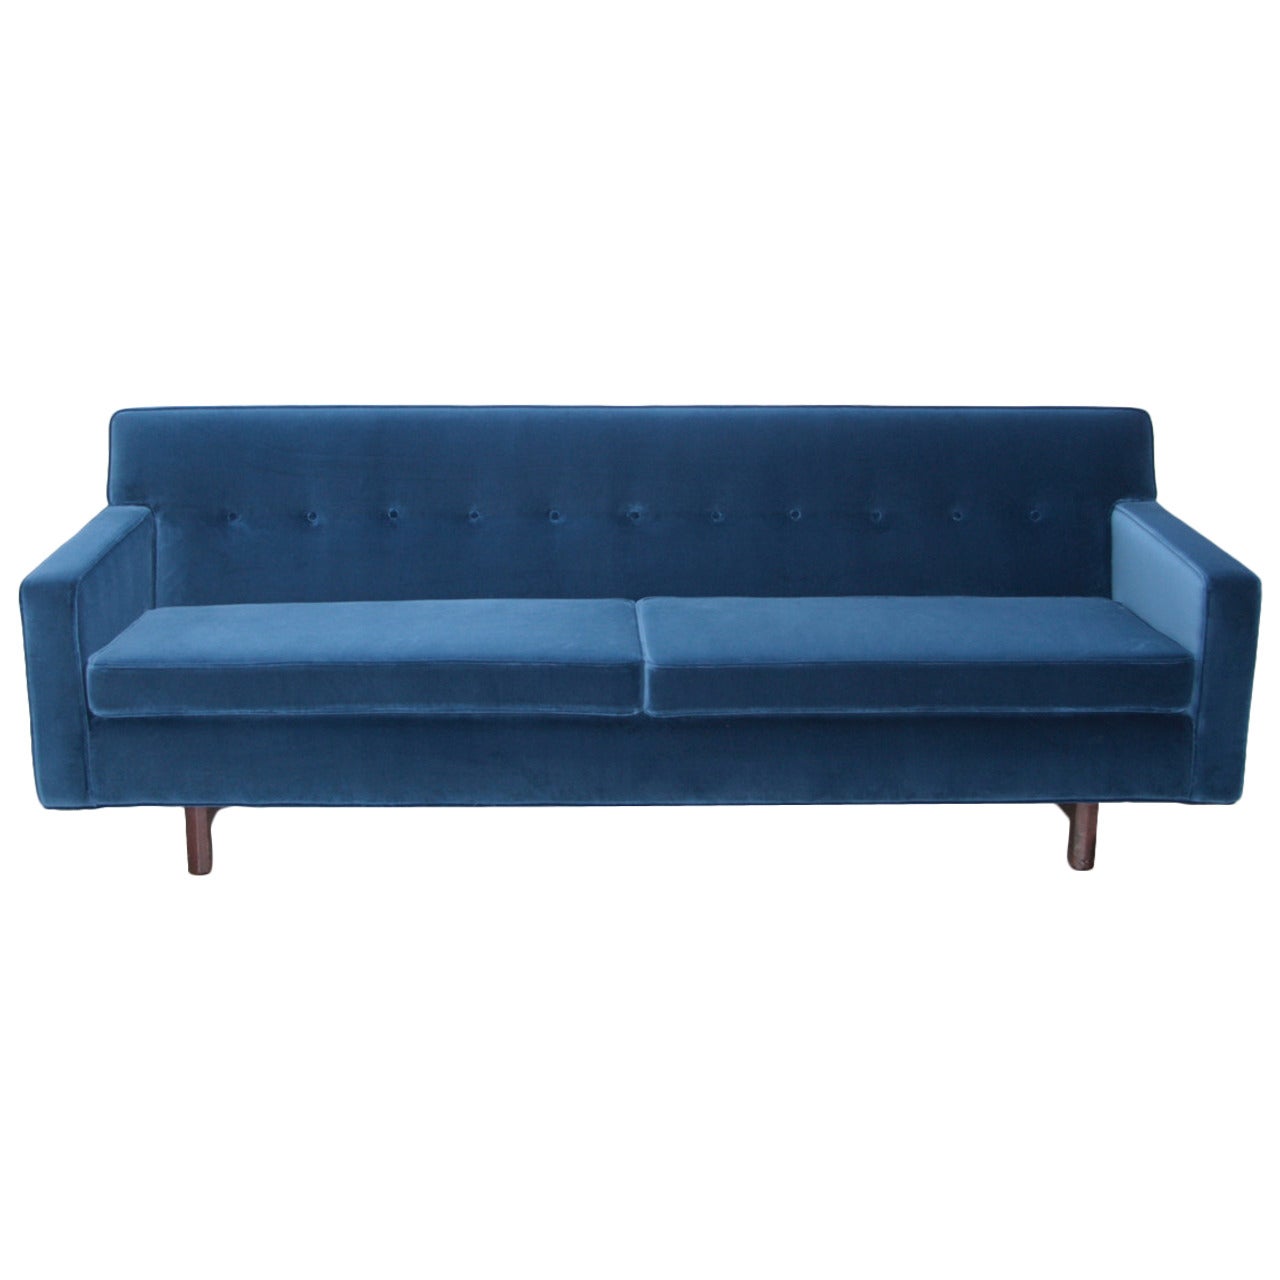 New Upholstered Edward Wormley Sofa in Indigo Dedar Fabric for Dunbar For Sale